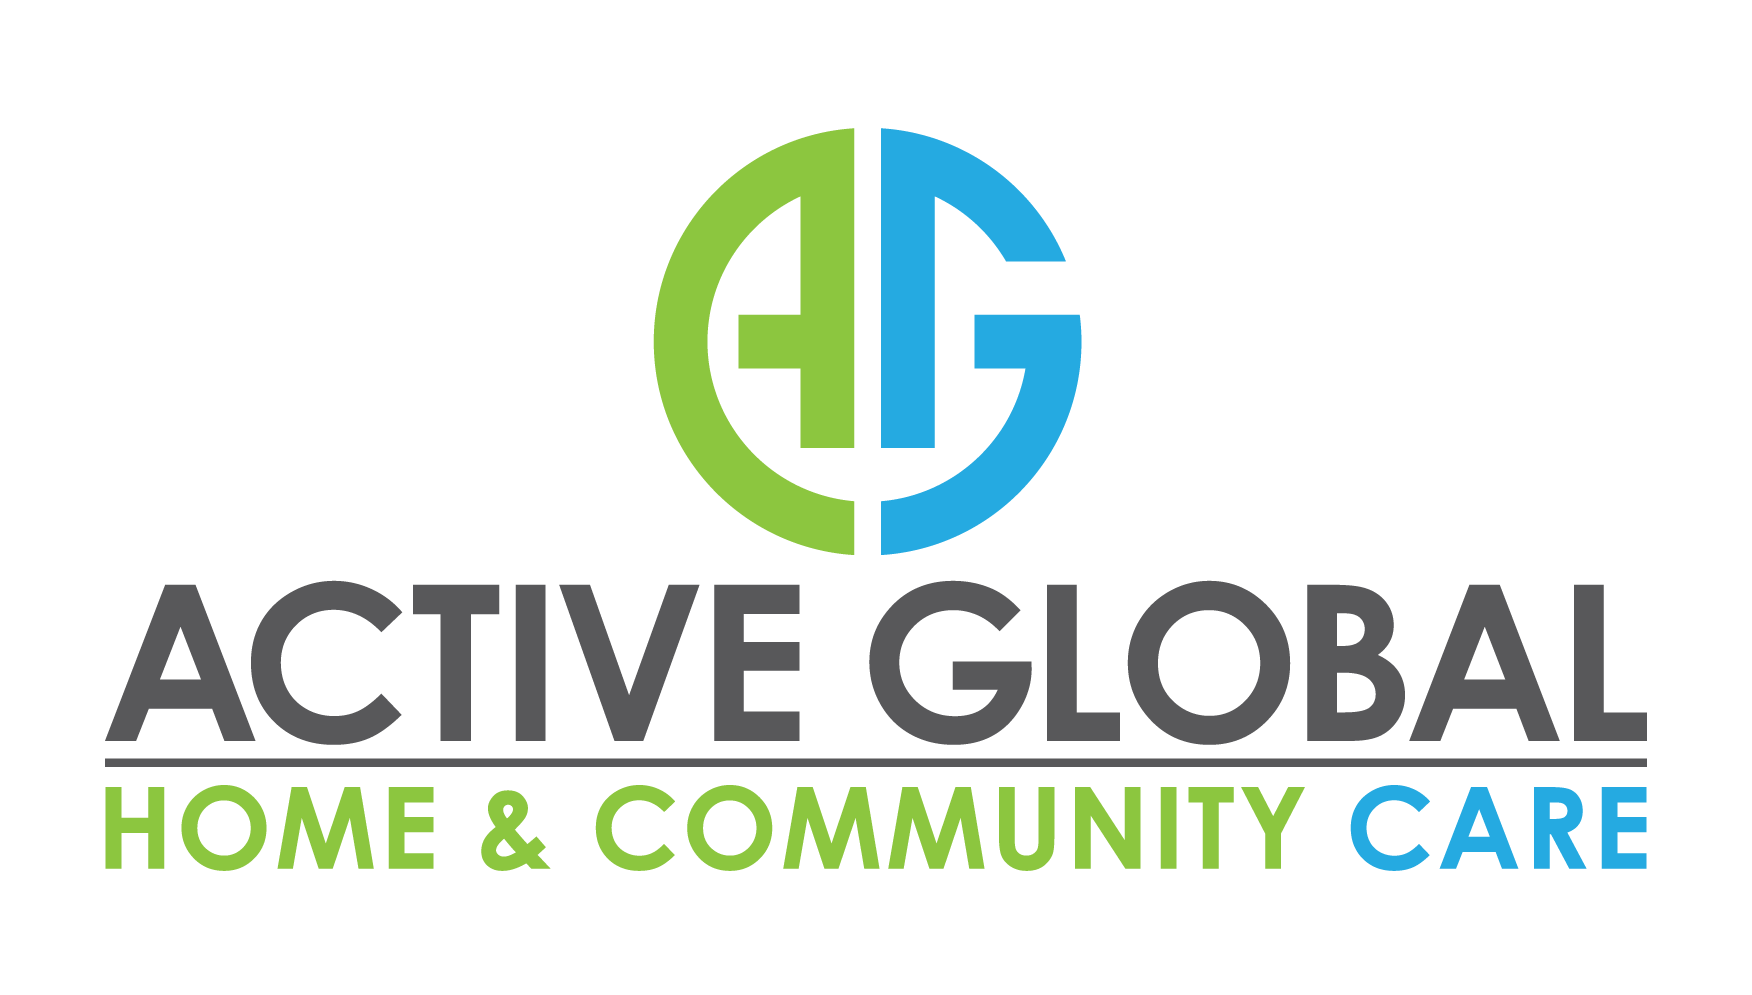 Global activity. Глобал хоум.